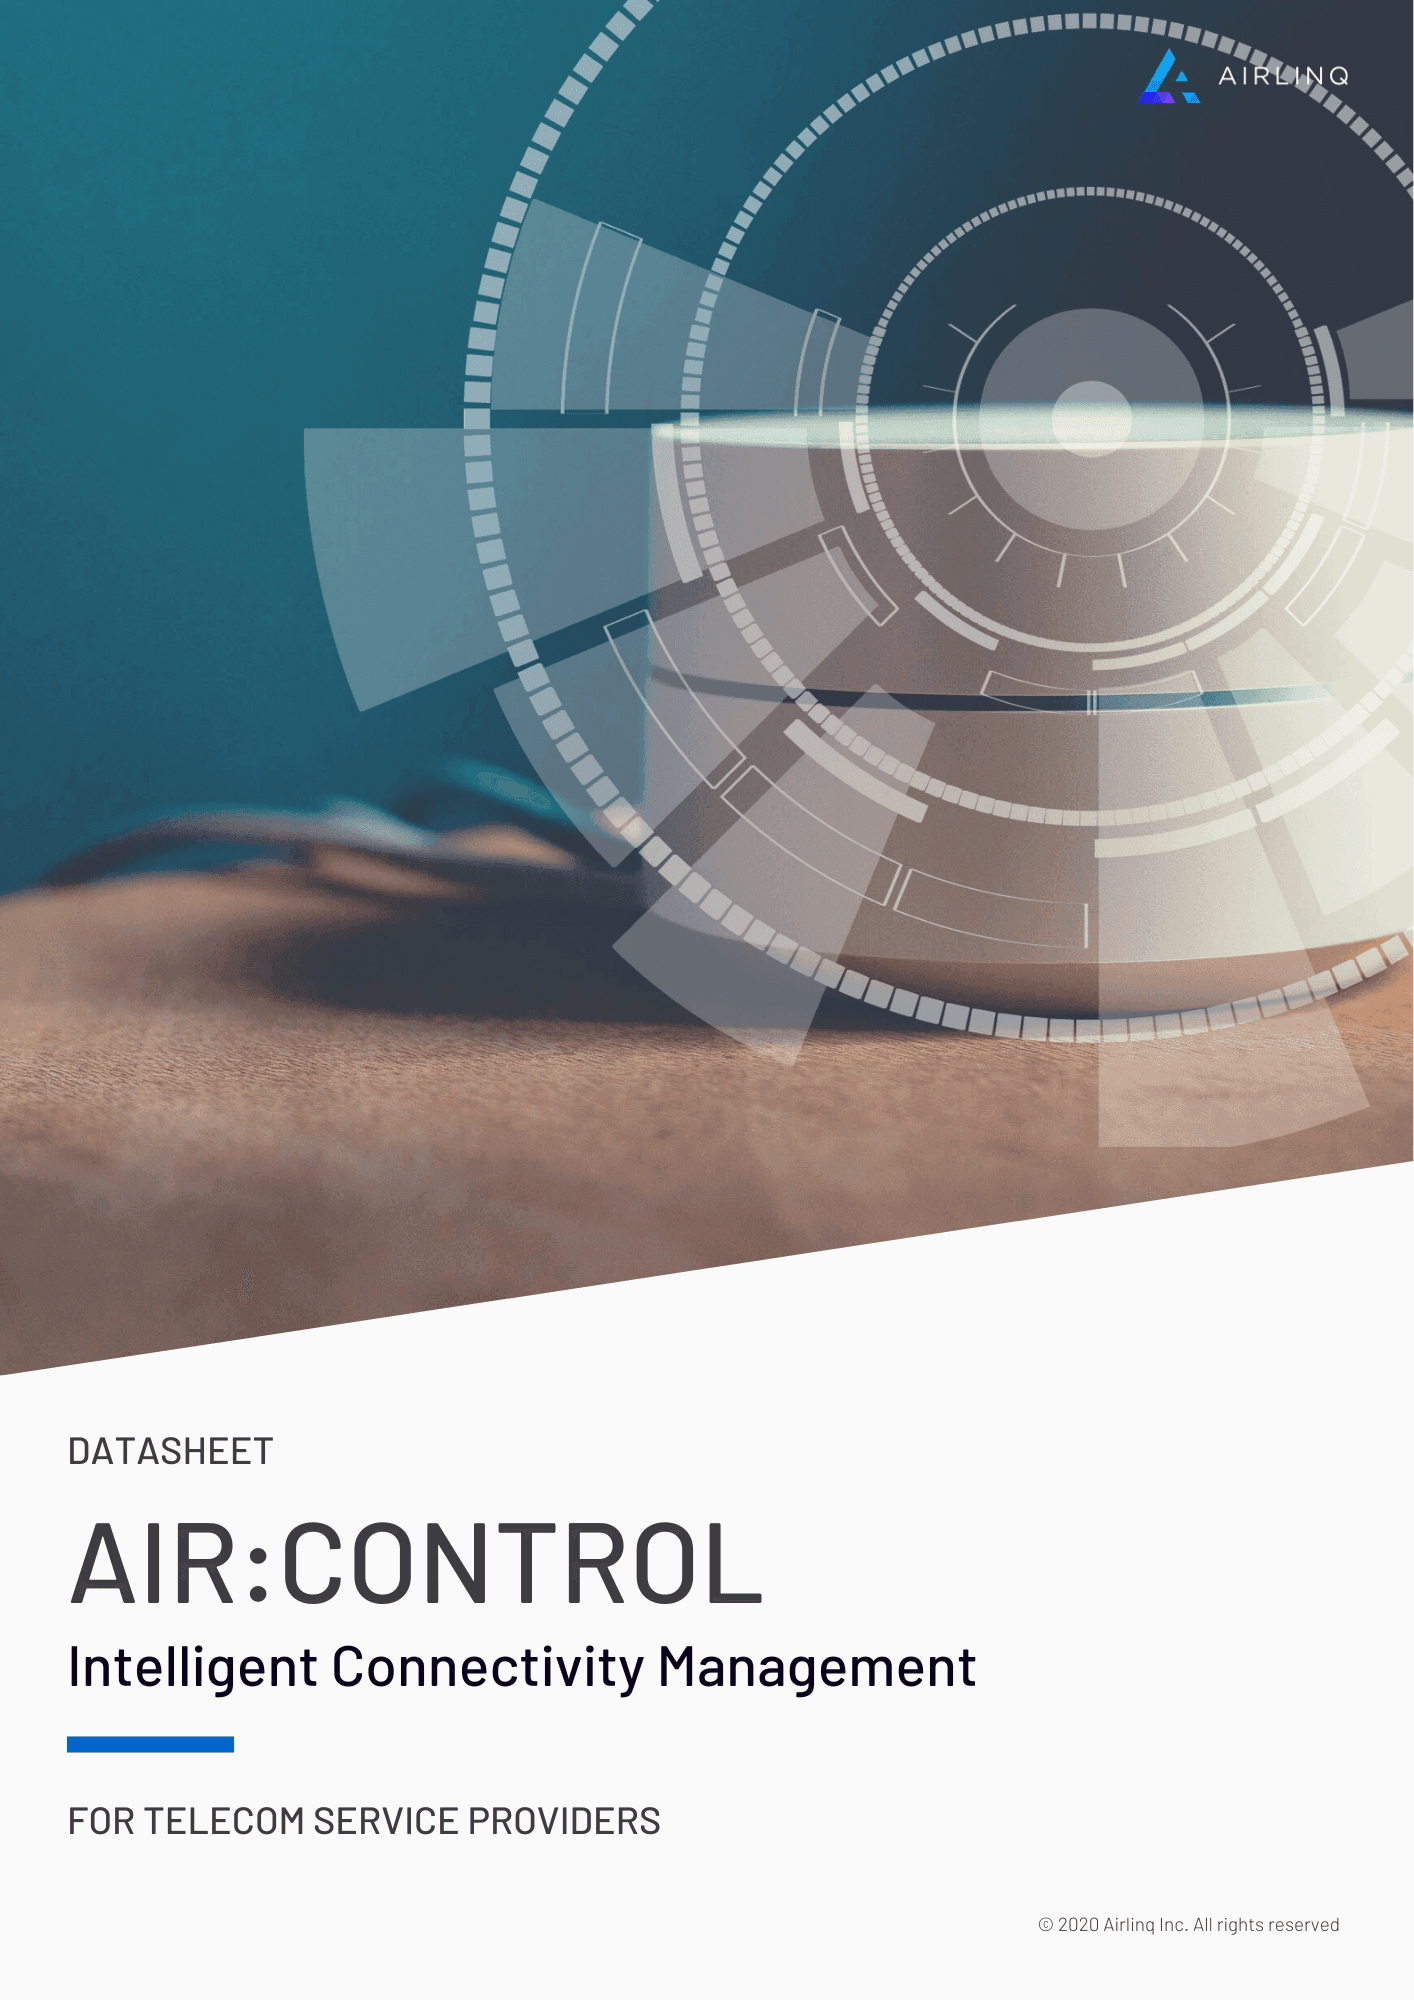 AIR:CONTROL Intelligent Connectivity Management - Airlinq